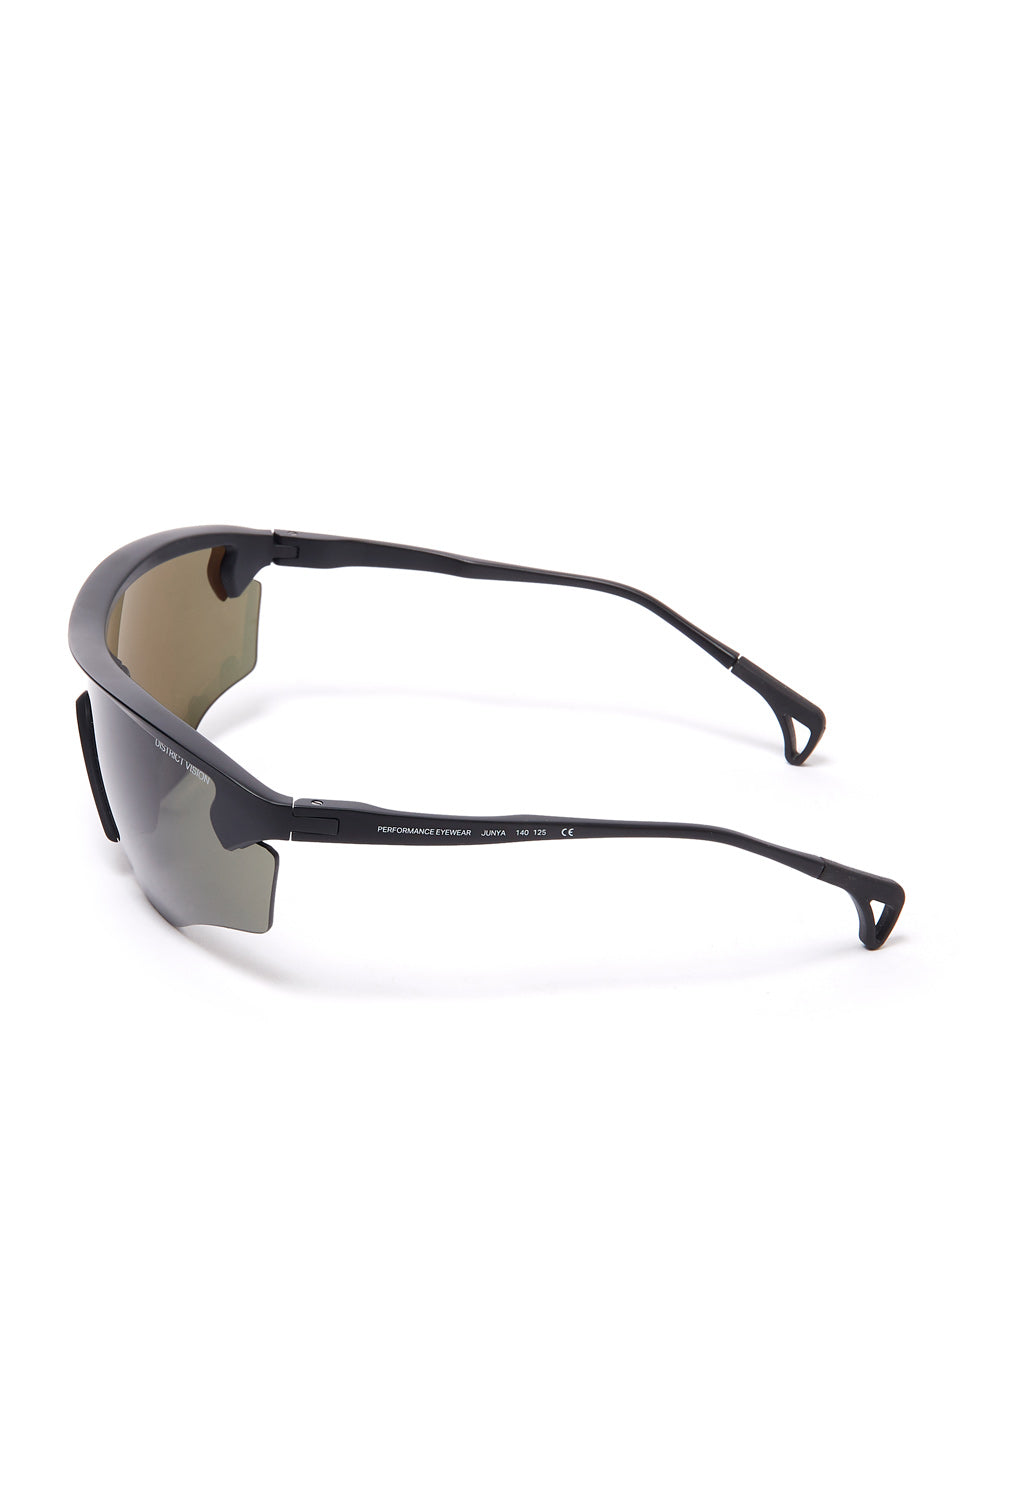 District Vision Junya Racer Sunglasses - G15